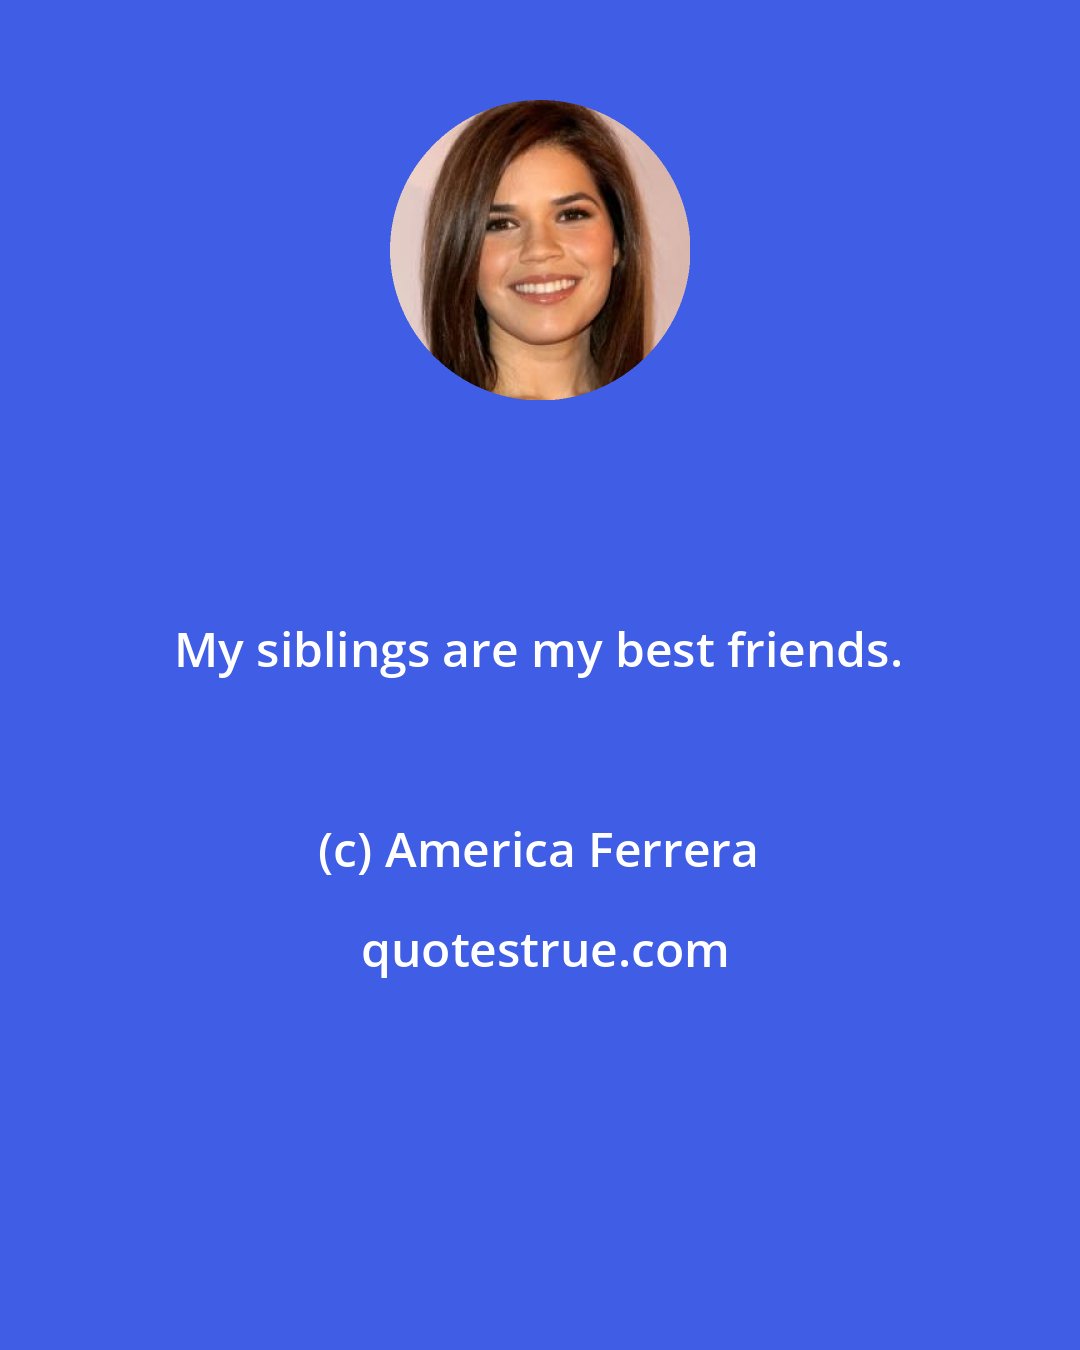 America Ferrera: My siblings are my best friends.